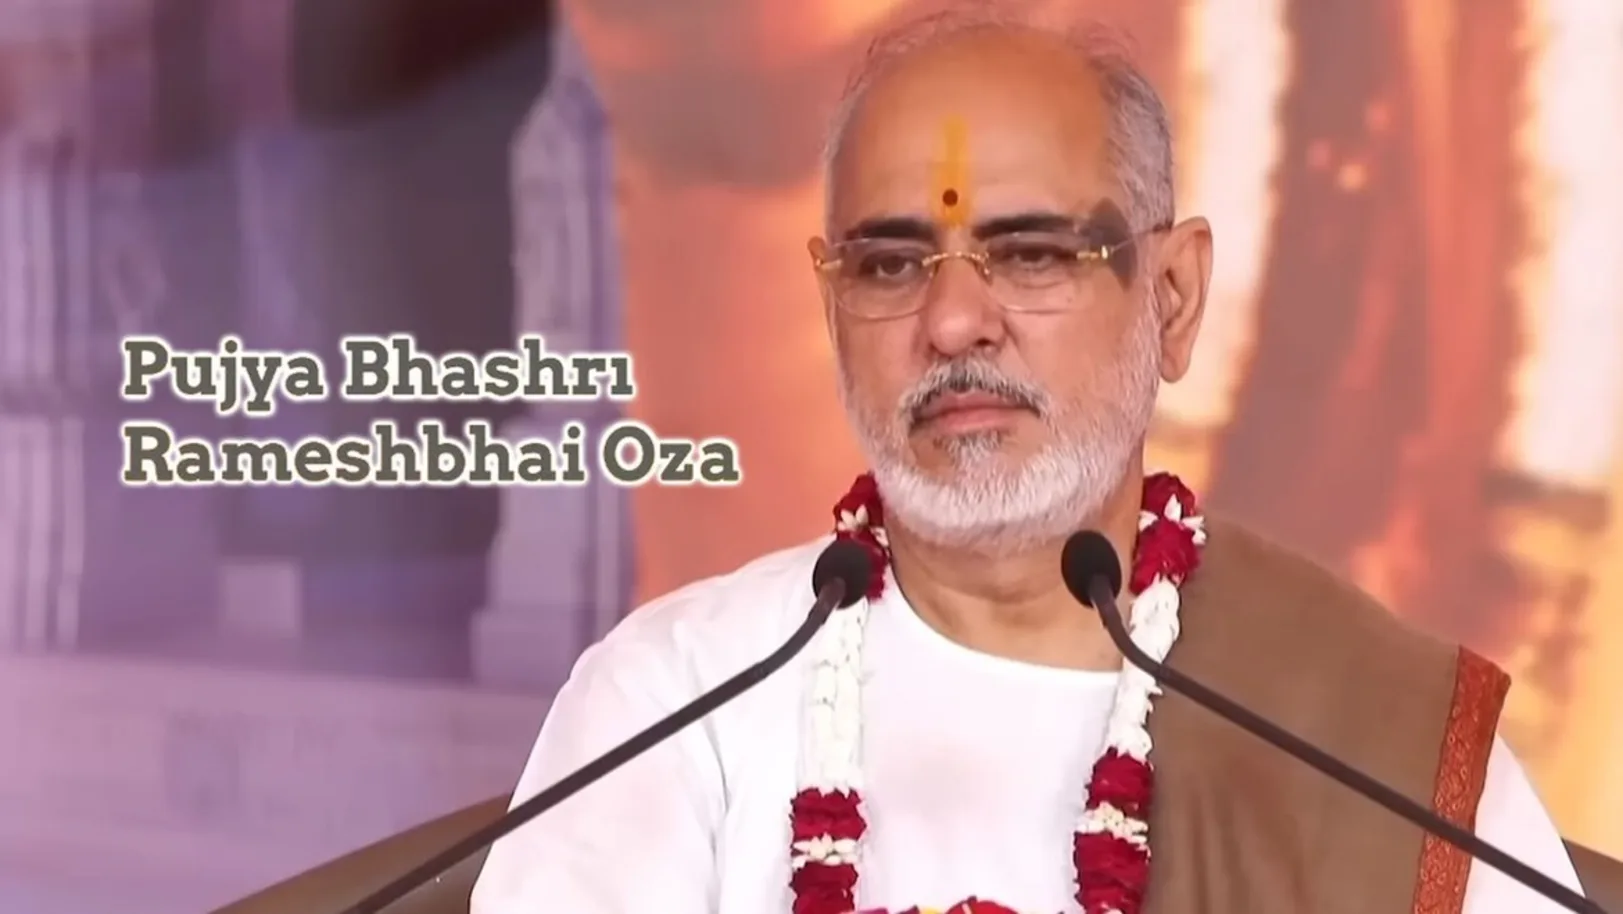 Pujya Bhaishri Rameshbhai Oza Live Streaming Now On Aastha Bhajan